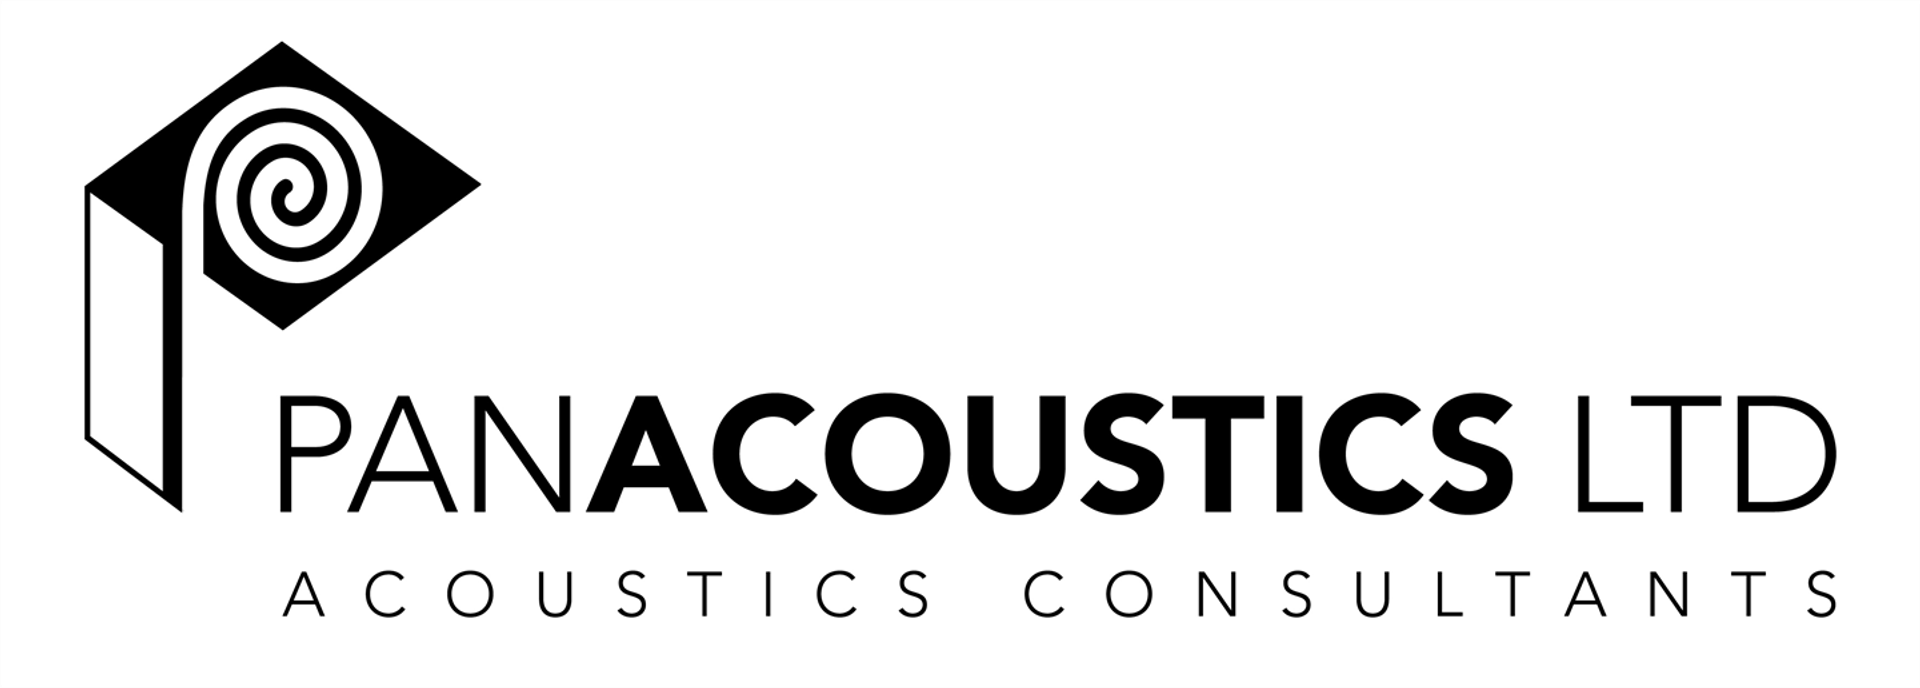 Panacoustics Ltd